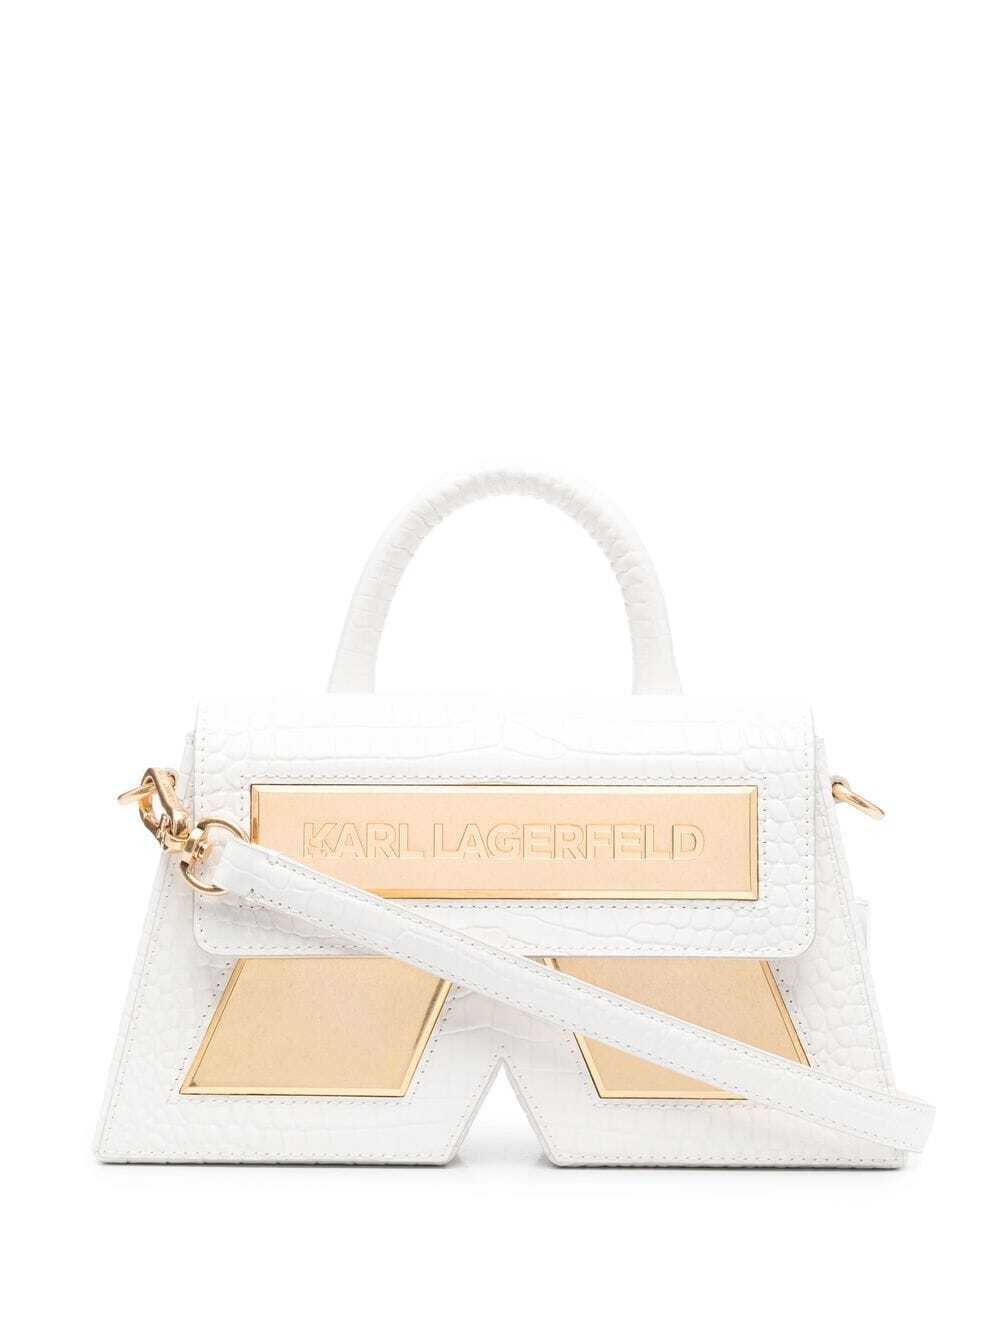 Karl Lagerfeld K/Essential leather shoulder bag - White